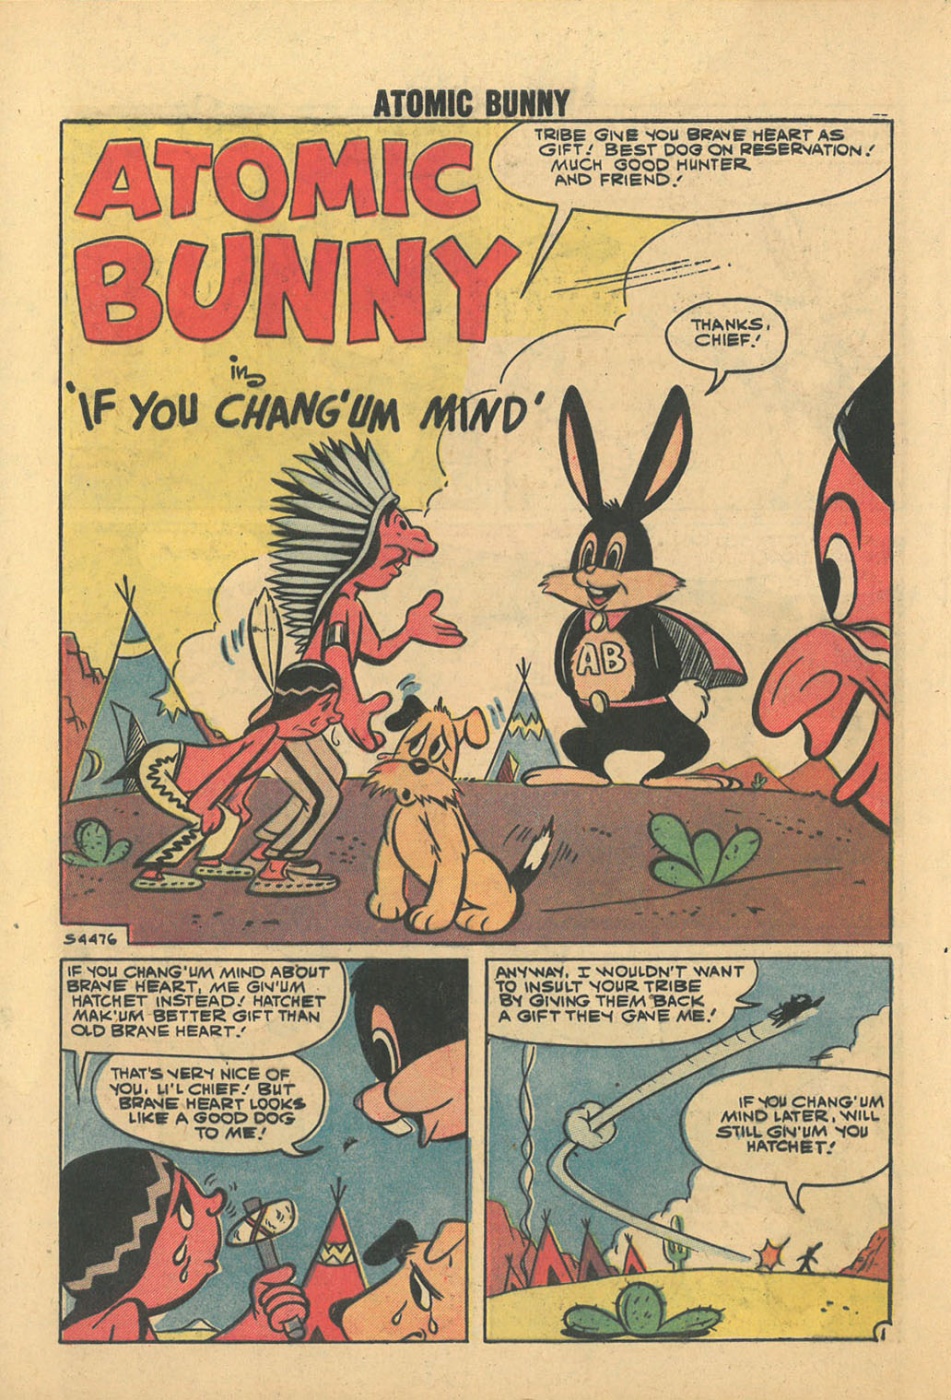 Atomic-Bunny-Comic-Strips (b) (27)